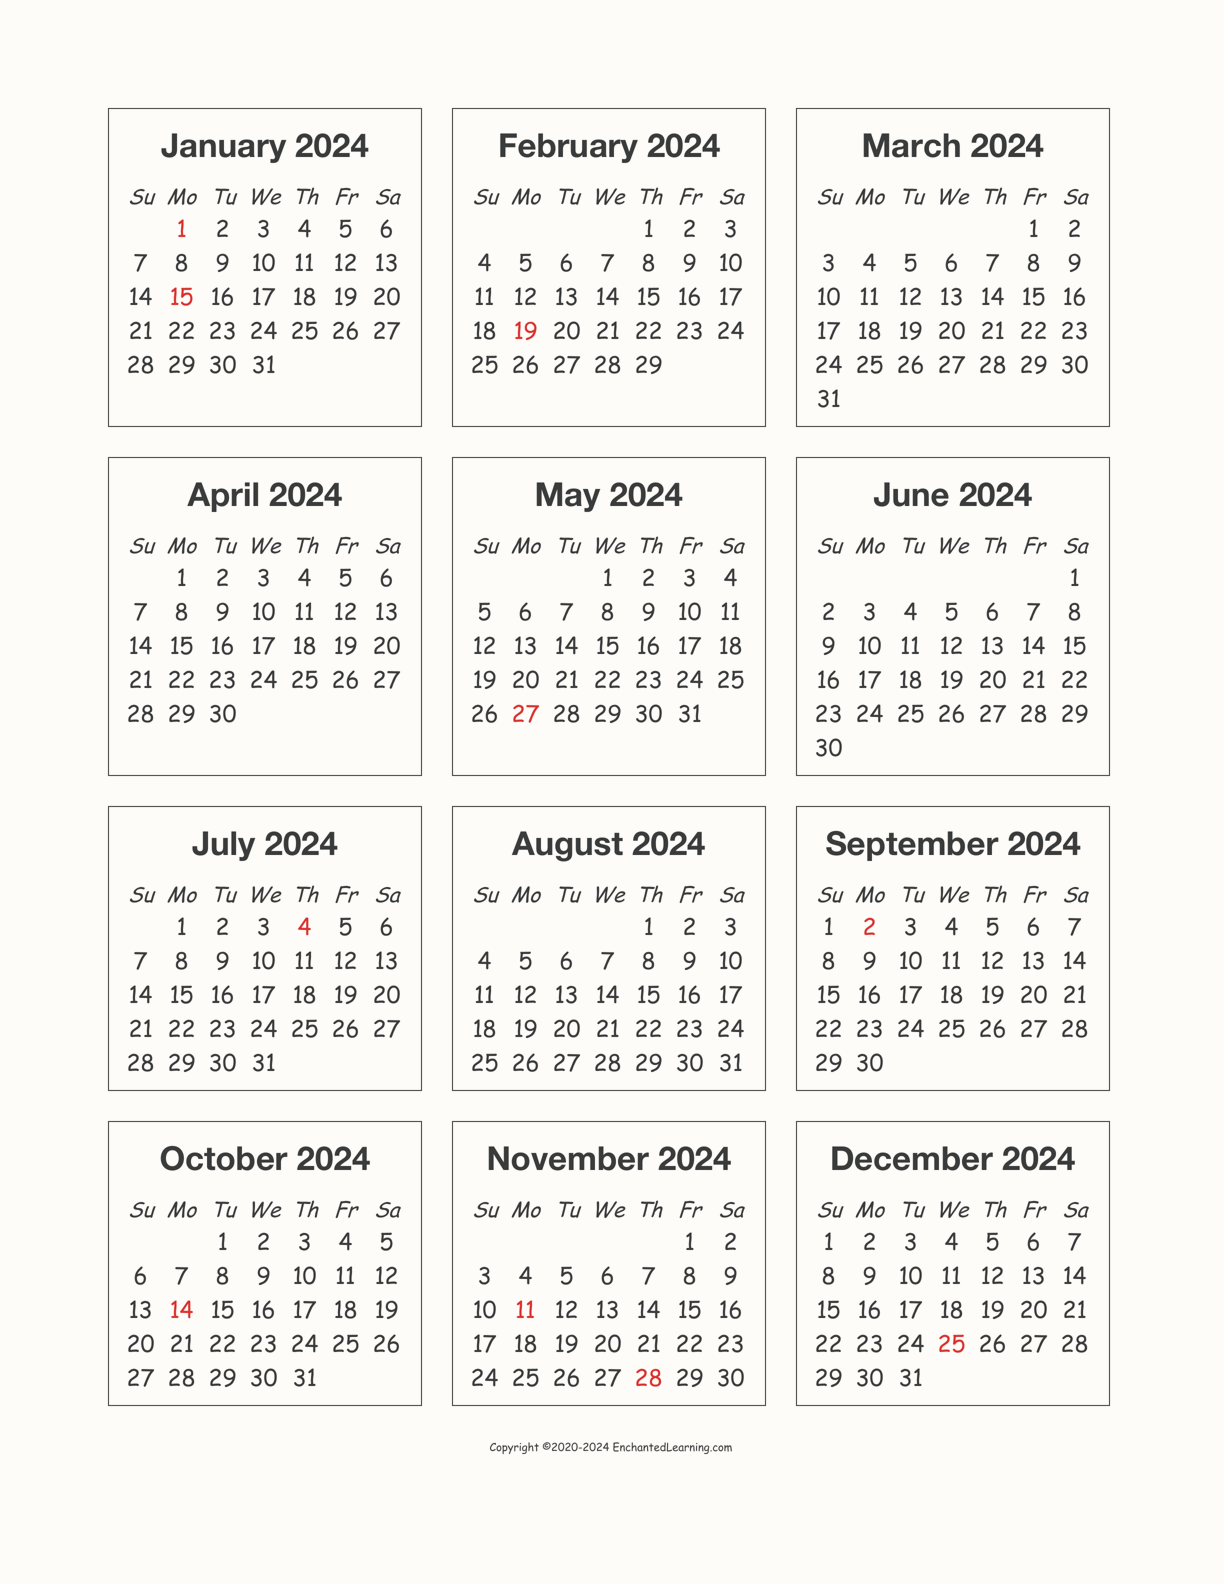 2024 OnePage Calendar Enchanted Learning